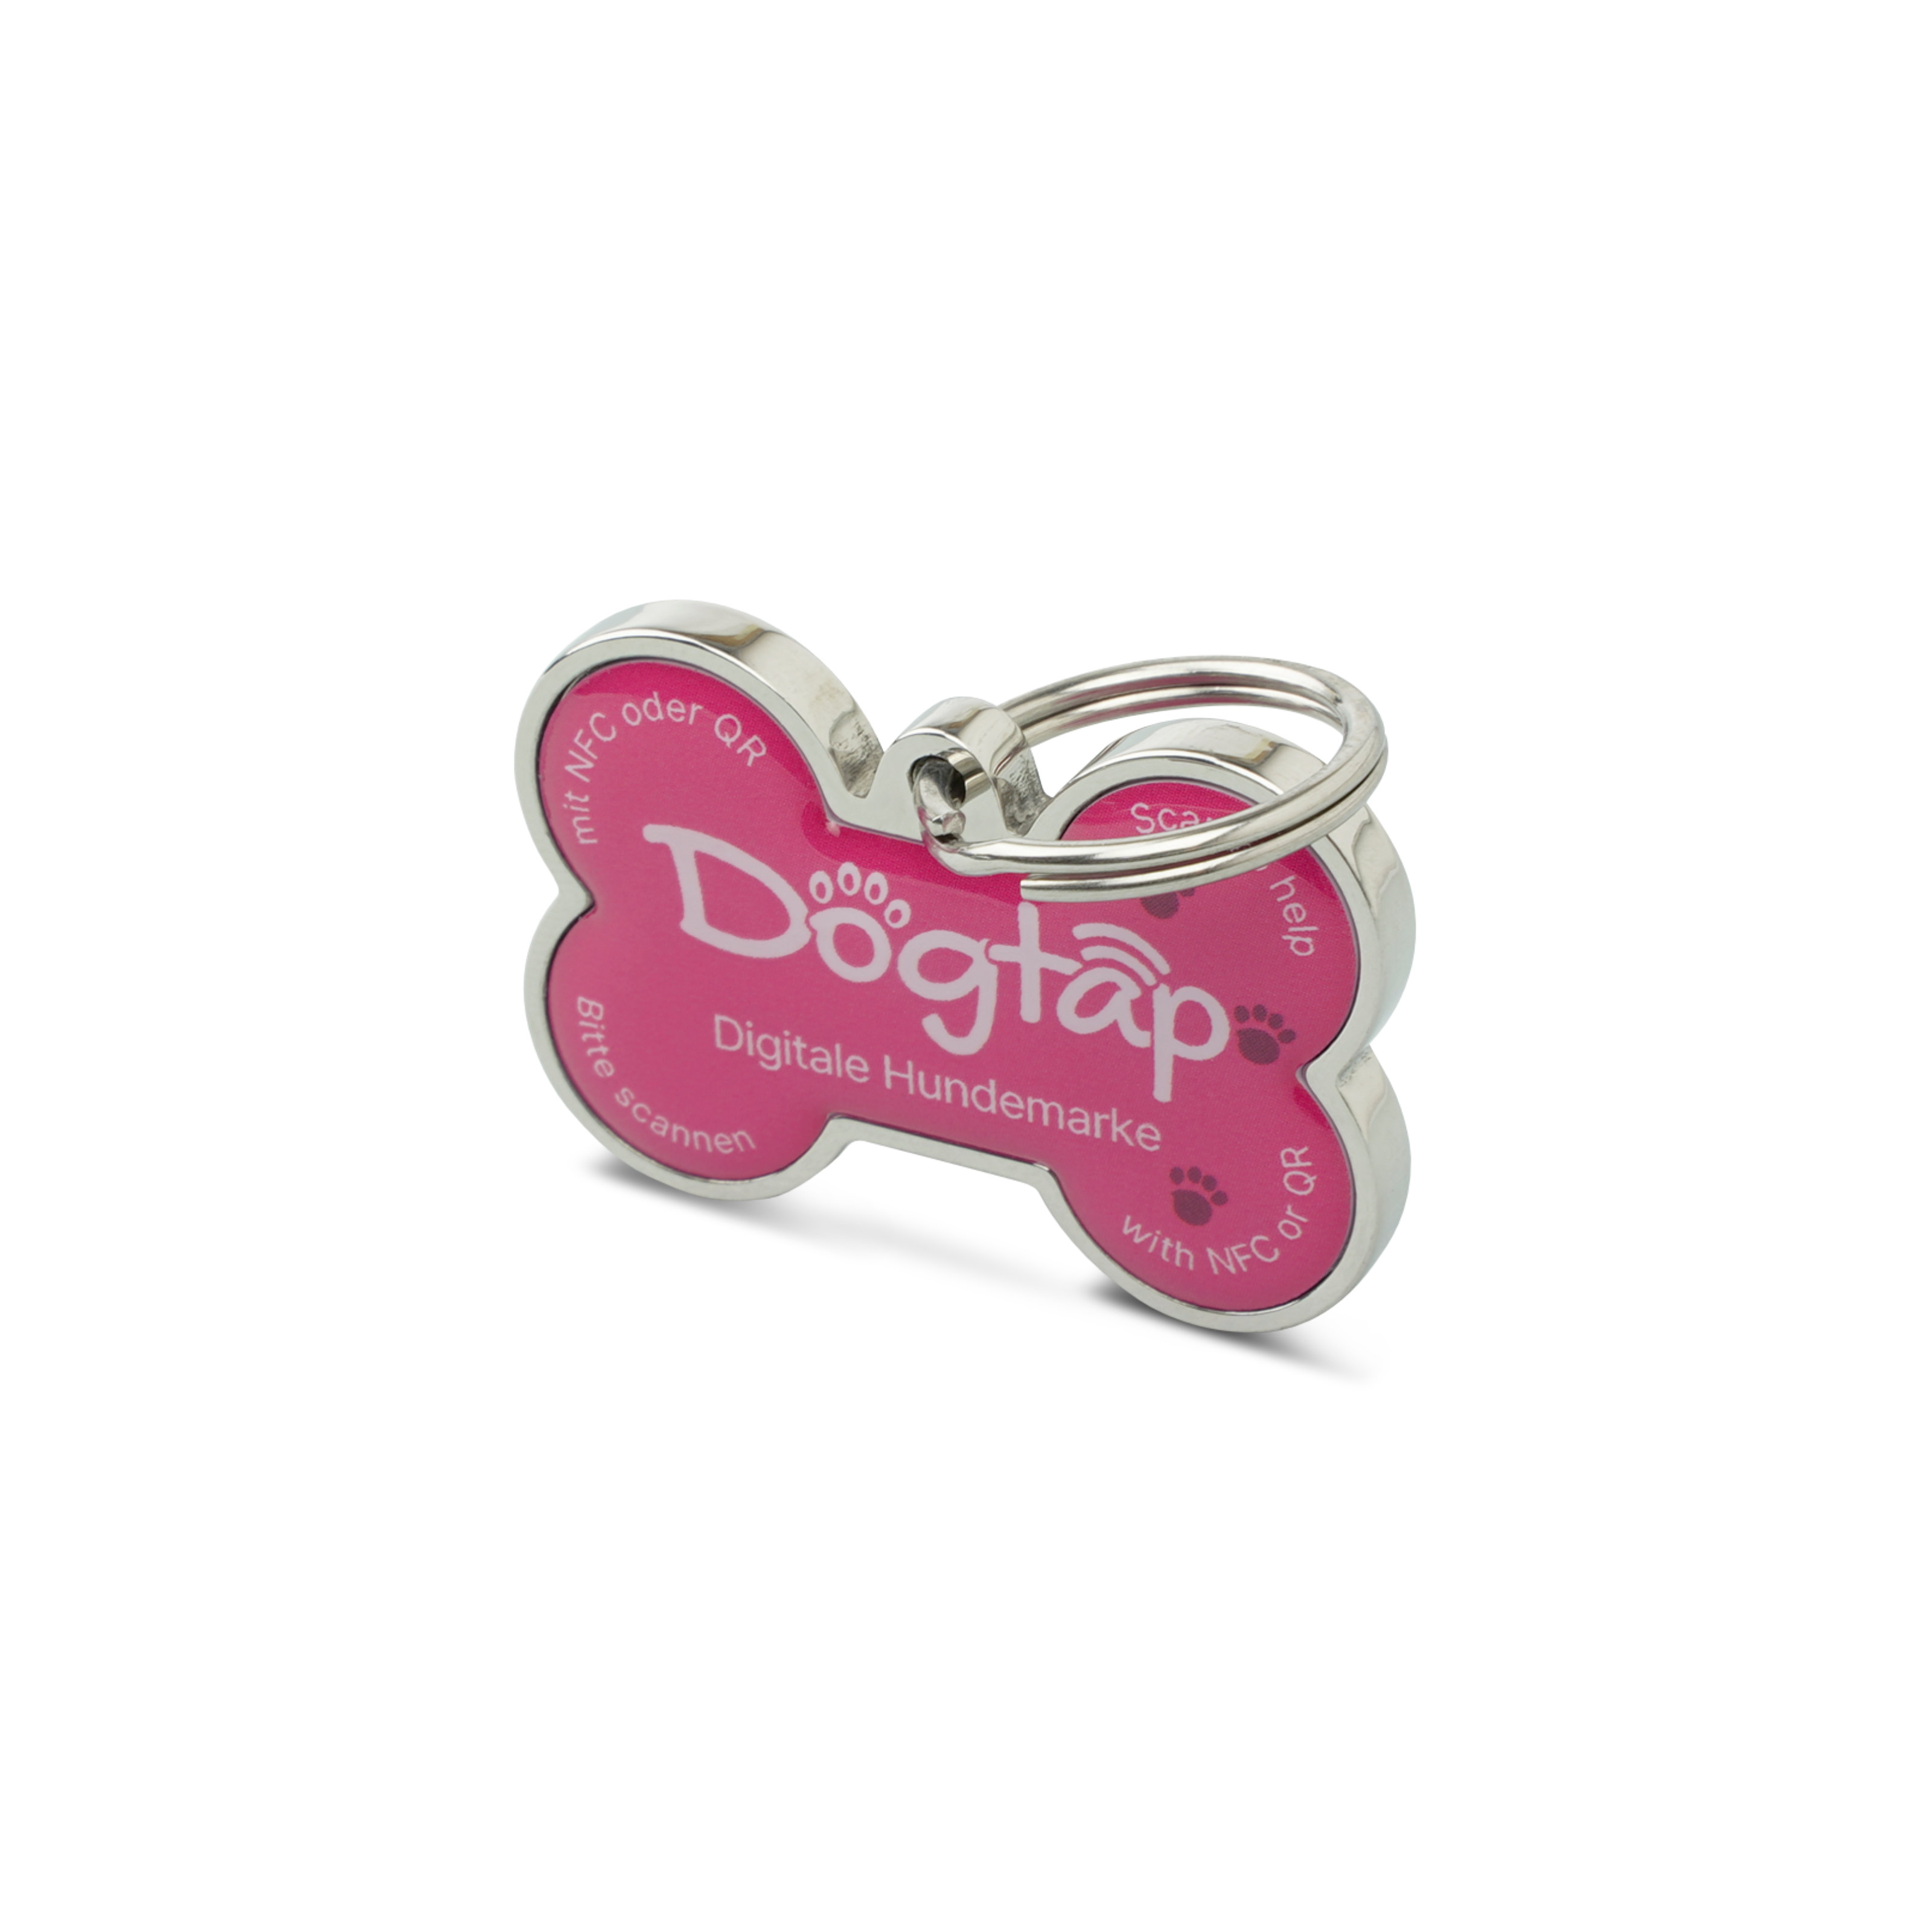 Dogtap Solid - Digitale Hundemarke - PVC / Metall - 41,6 x 28,5 x 4,6 mm - pink